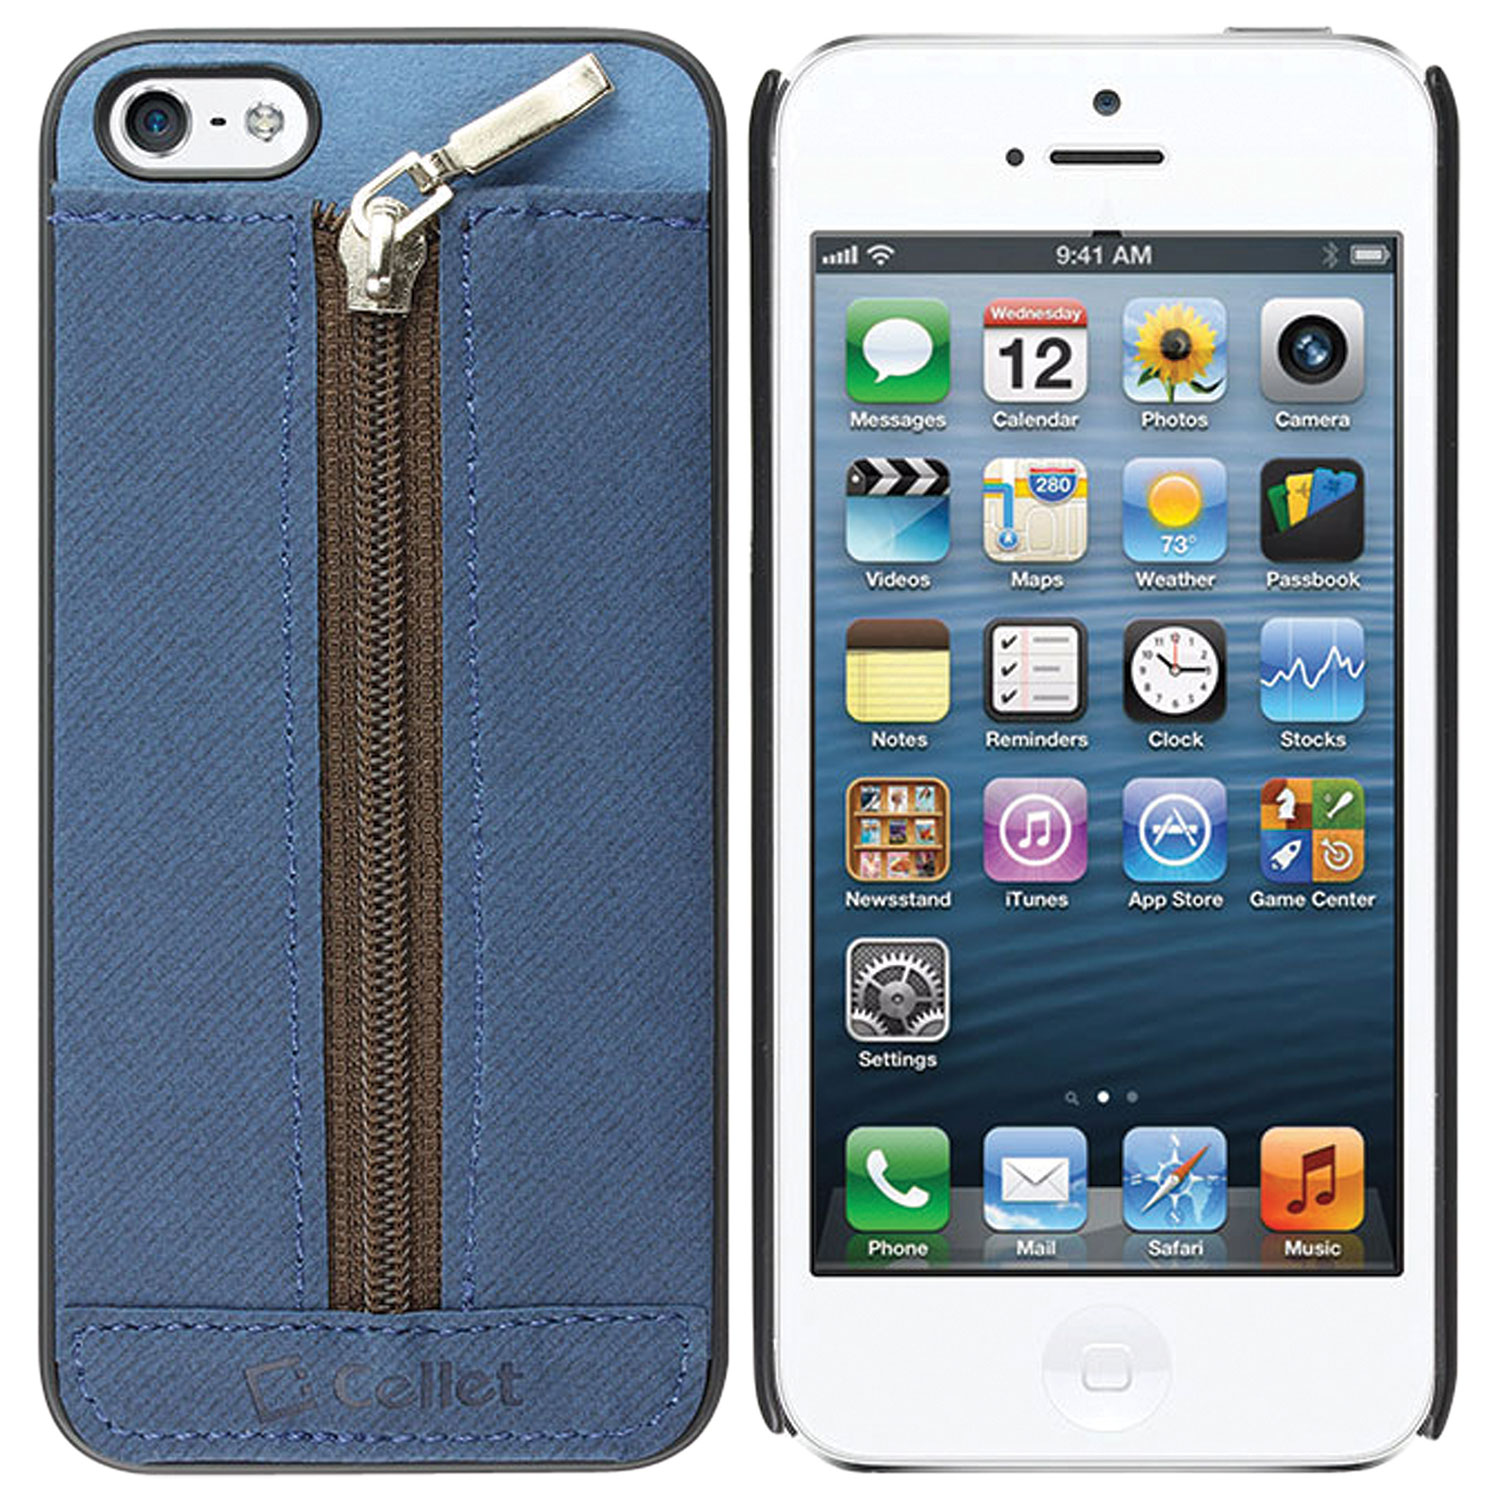 Cellet Zipper iPhone 5/5s Soft Shell Case - Blue